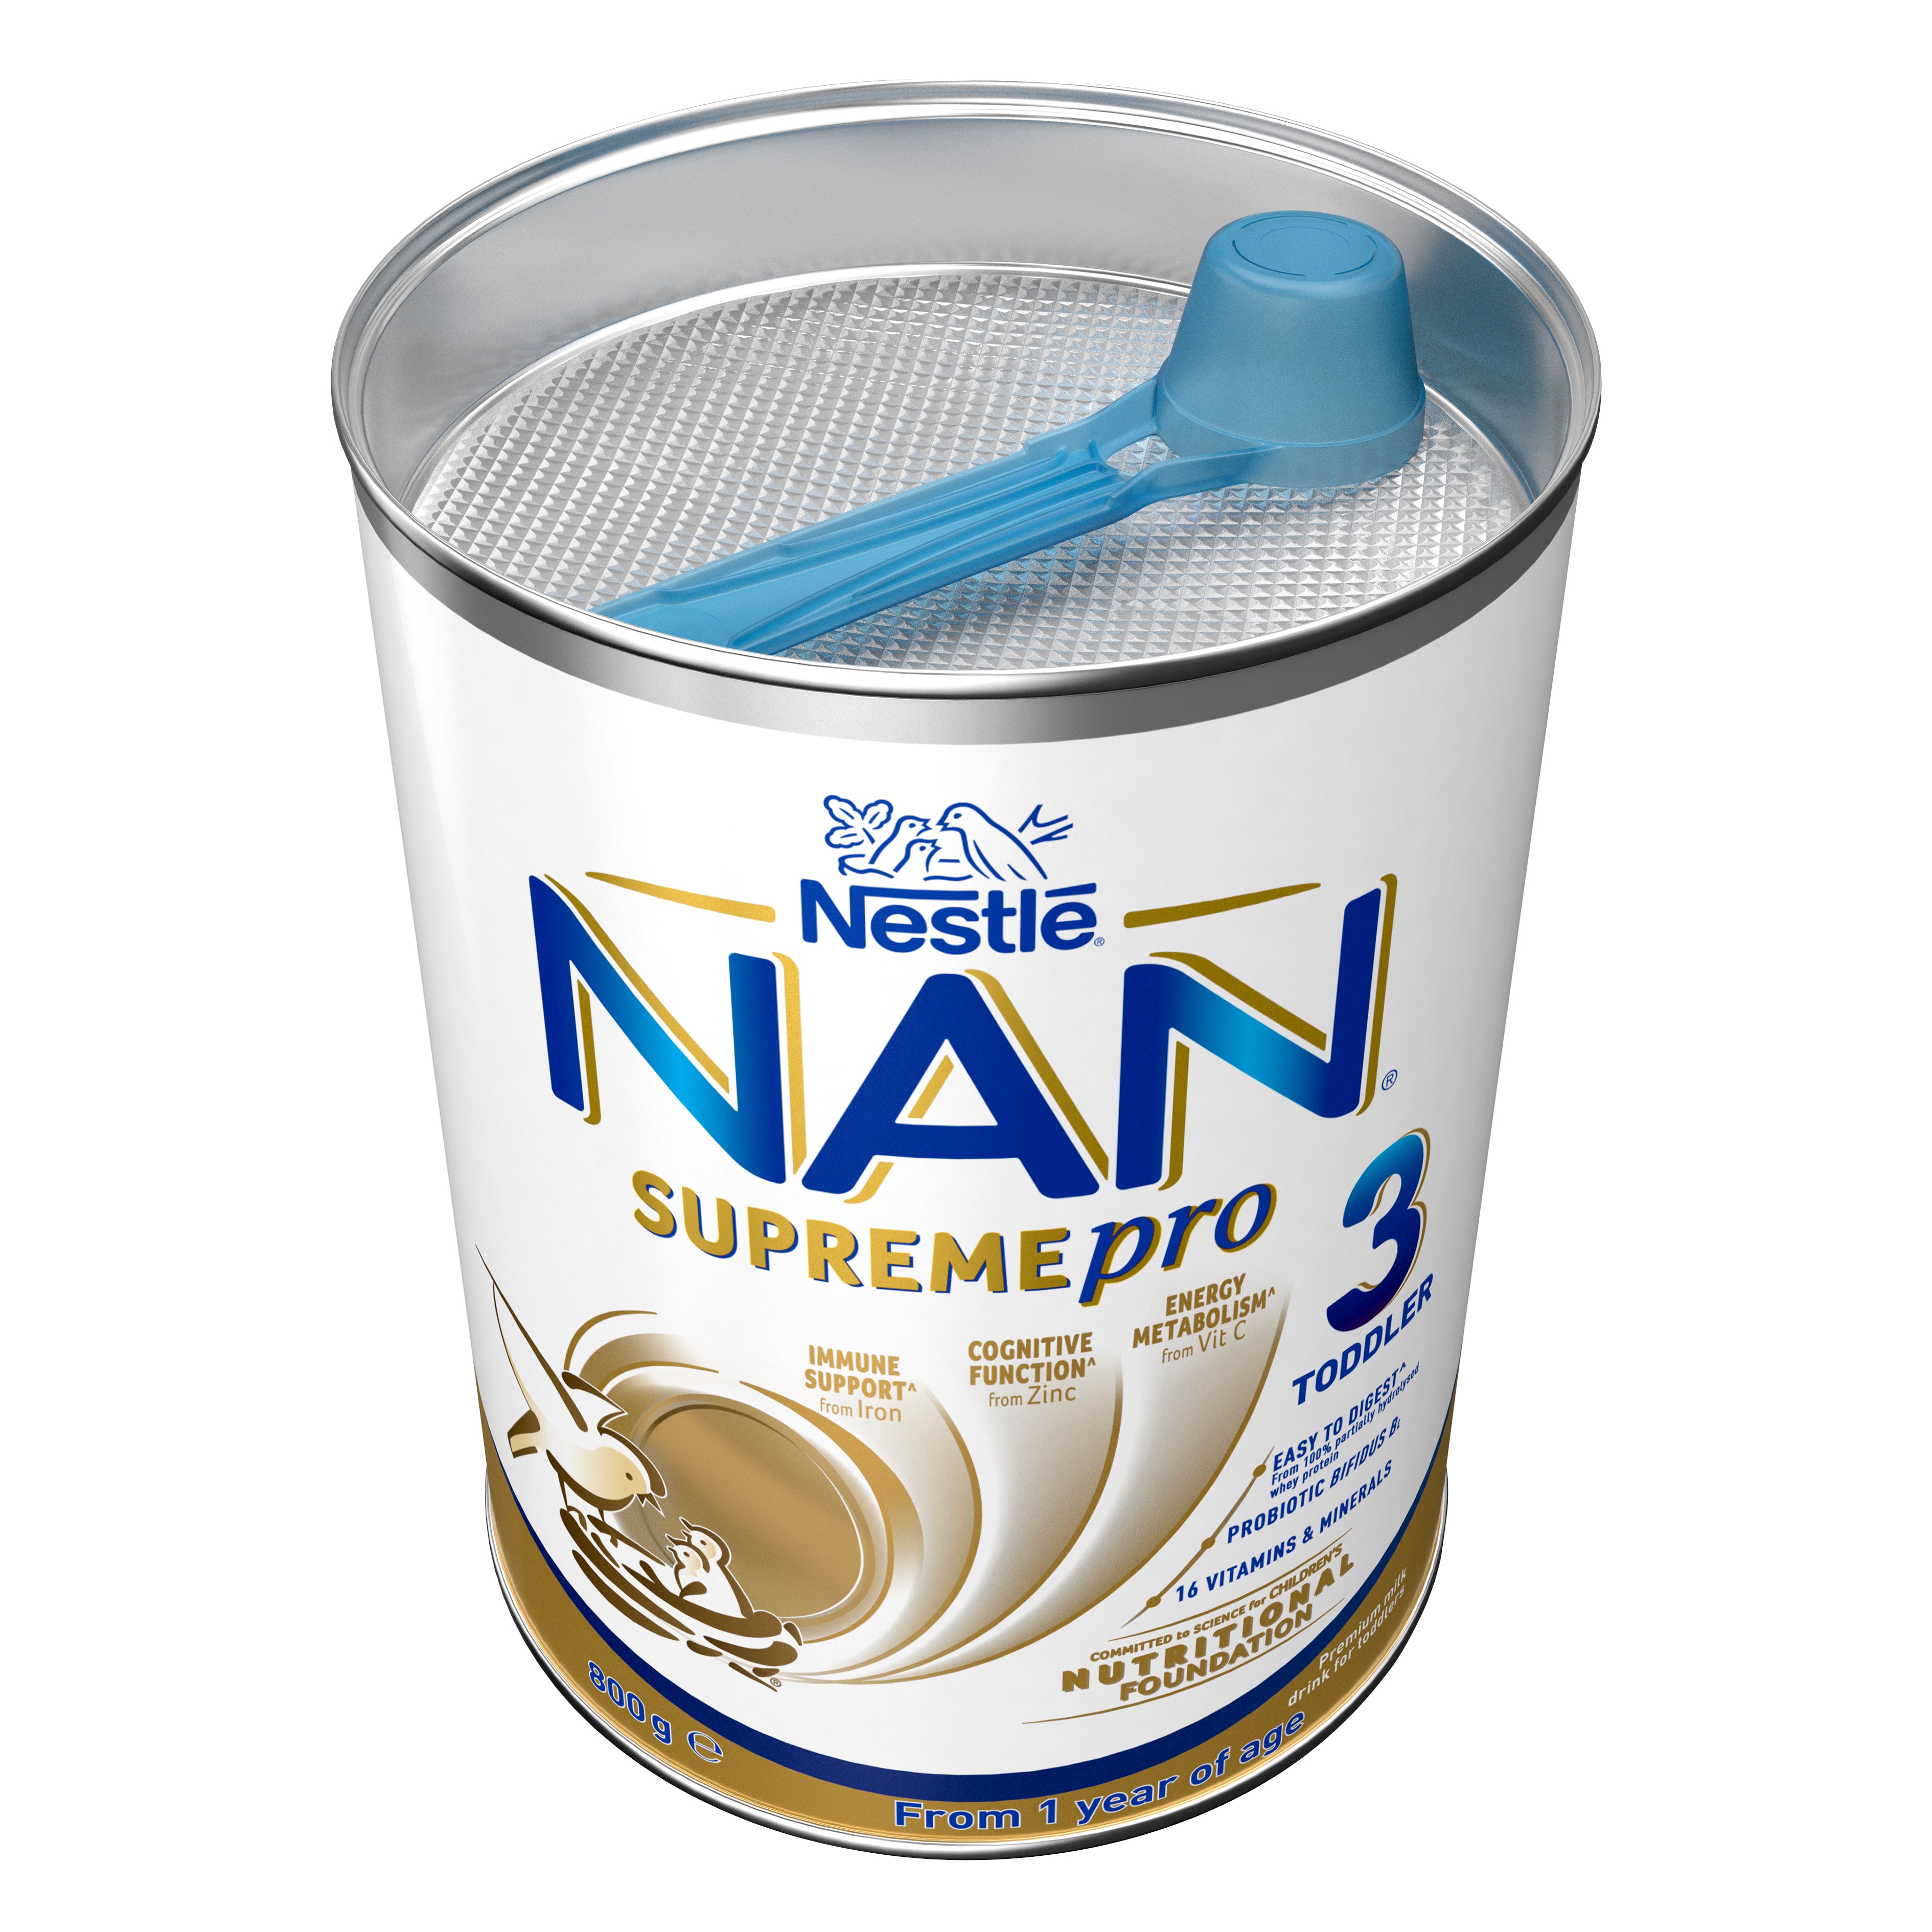 NAN SUPREMEpro 3 Sachets, Toddler Milk Drink